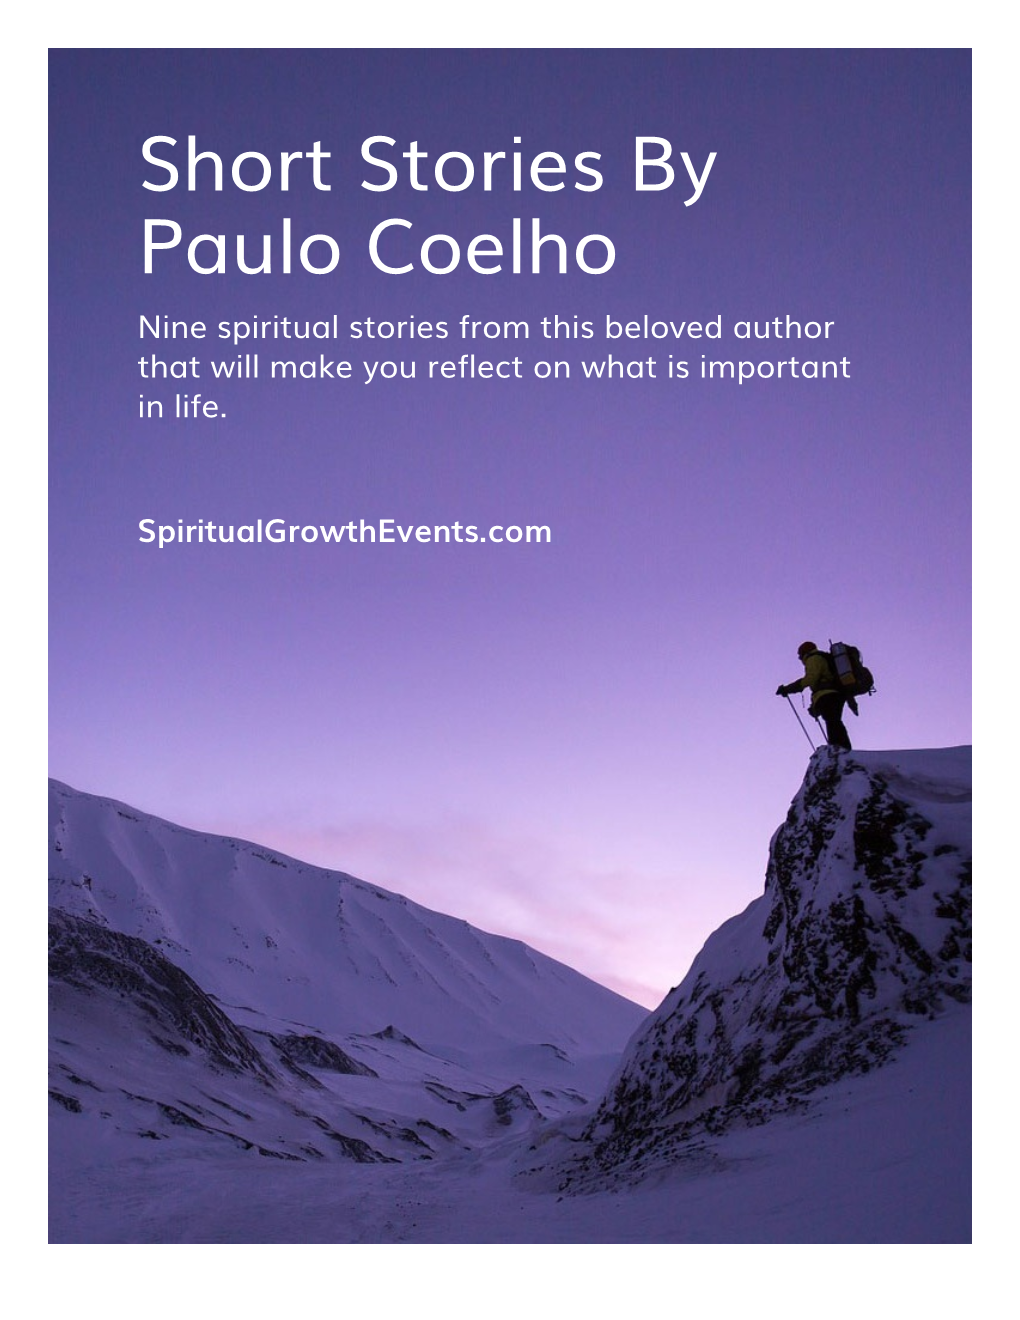 Paulo Coelho Short Stories By